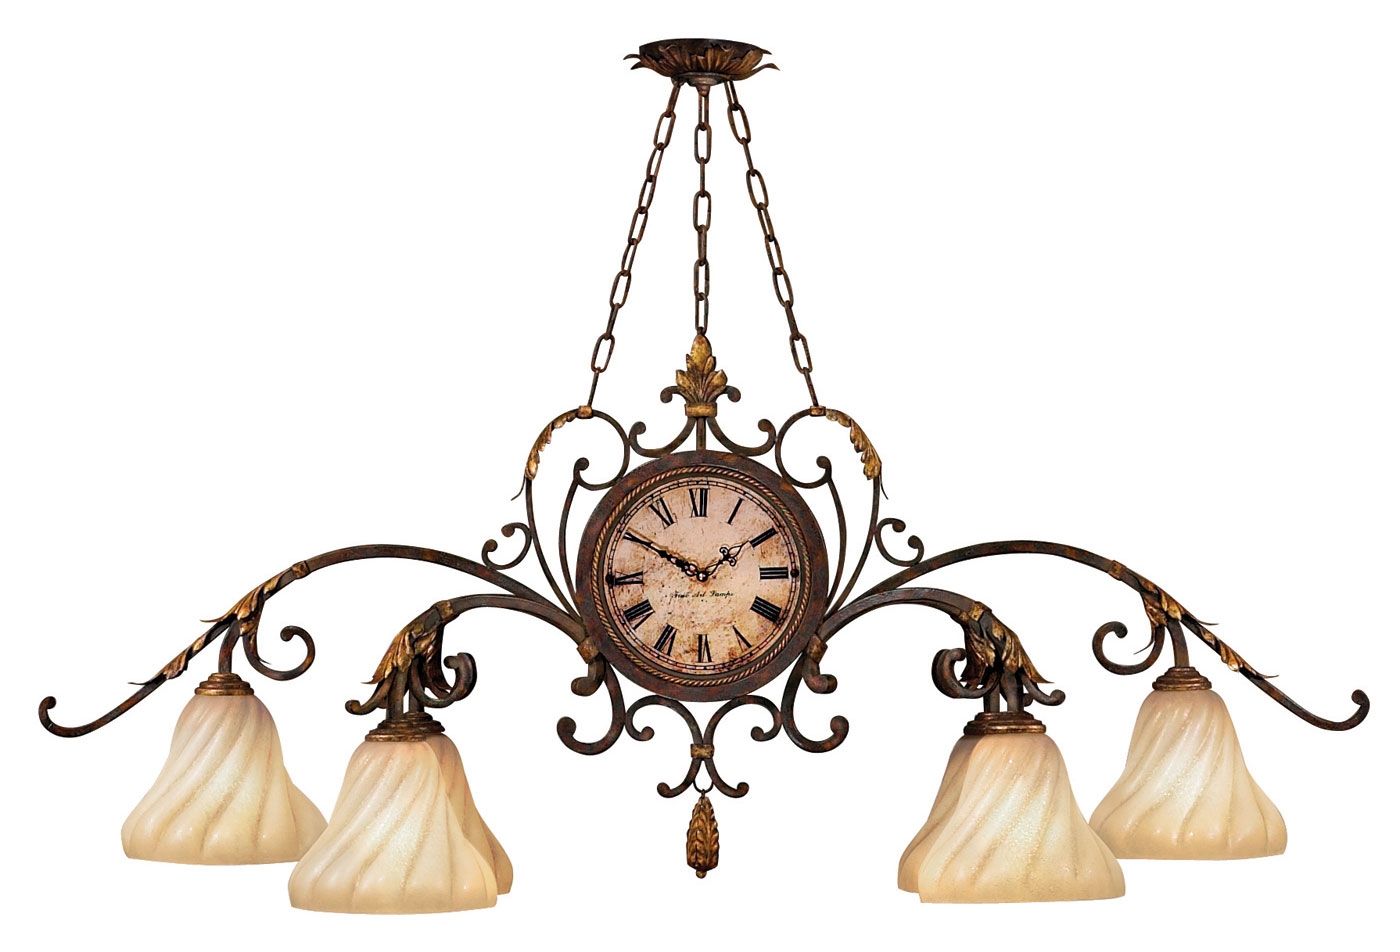 Lighting Oblong chandelier in warm antiqued gold finish